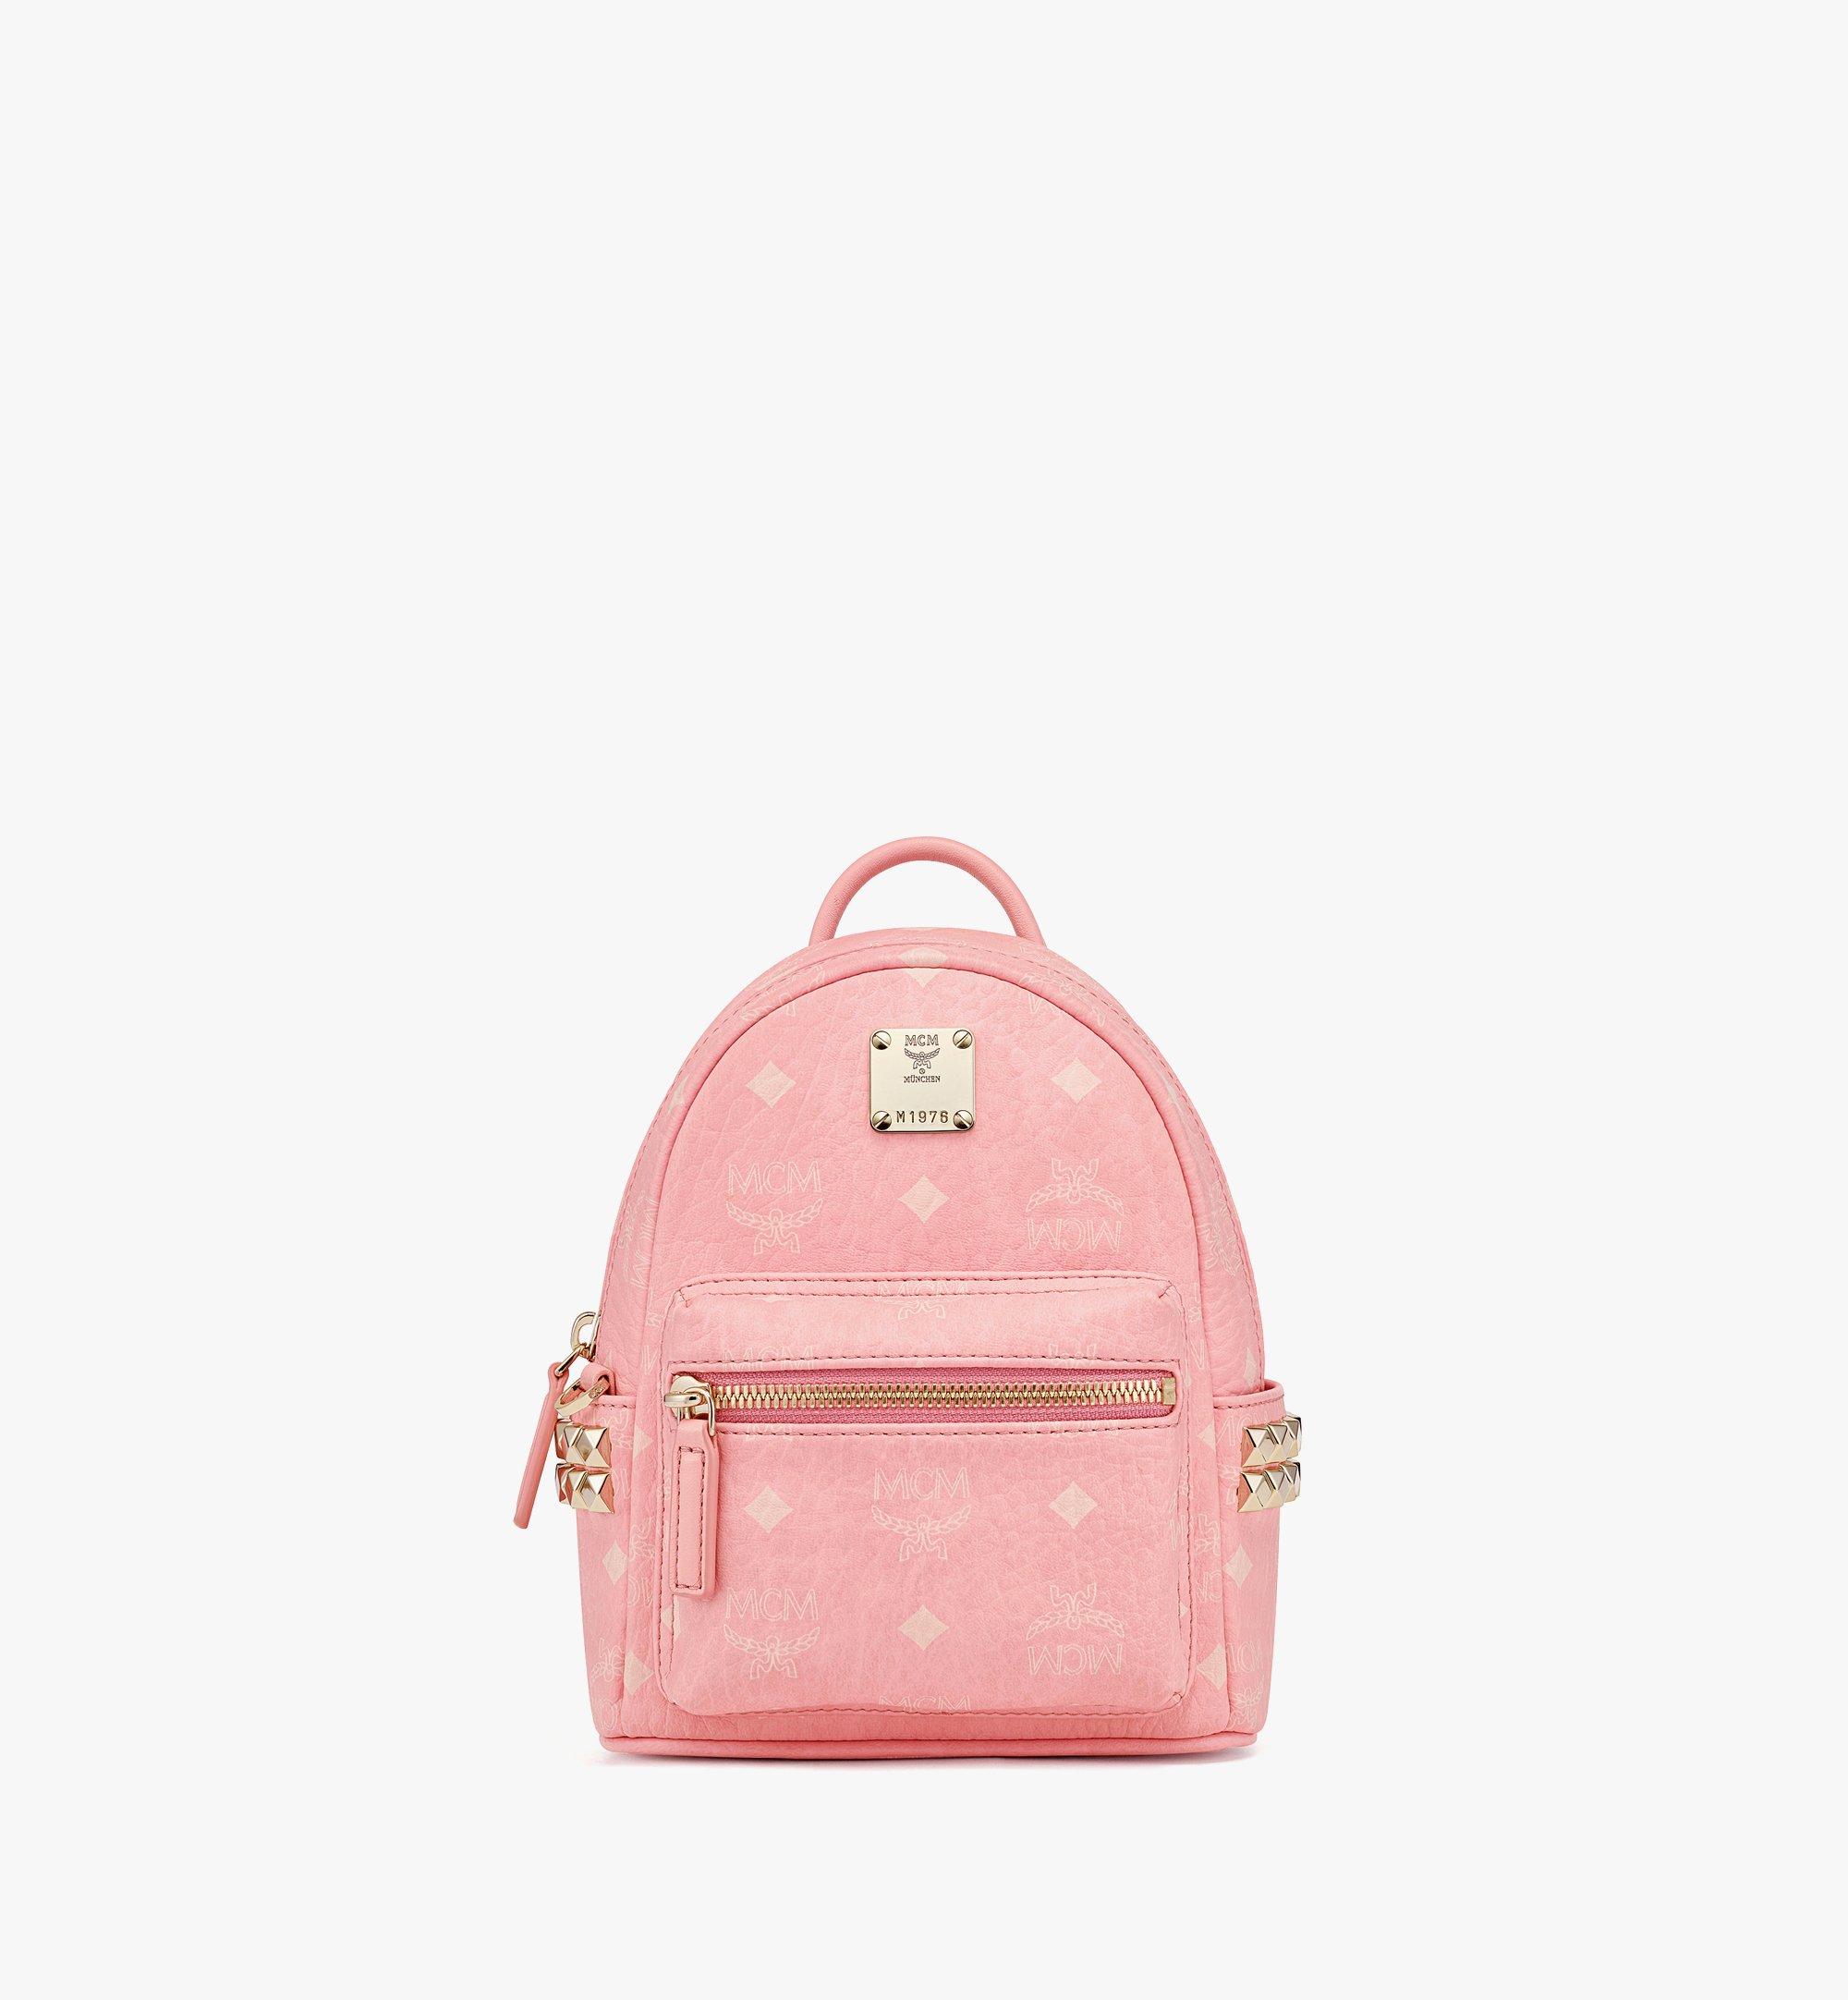 Mcm BackPack  Mcm backpack, Backpacks, Fashion backpack